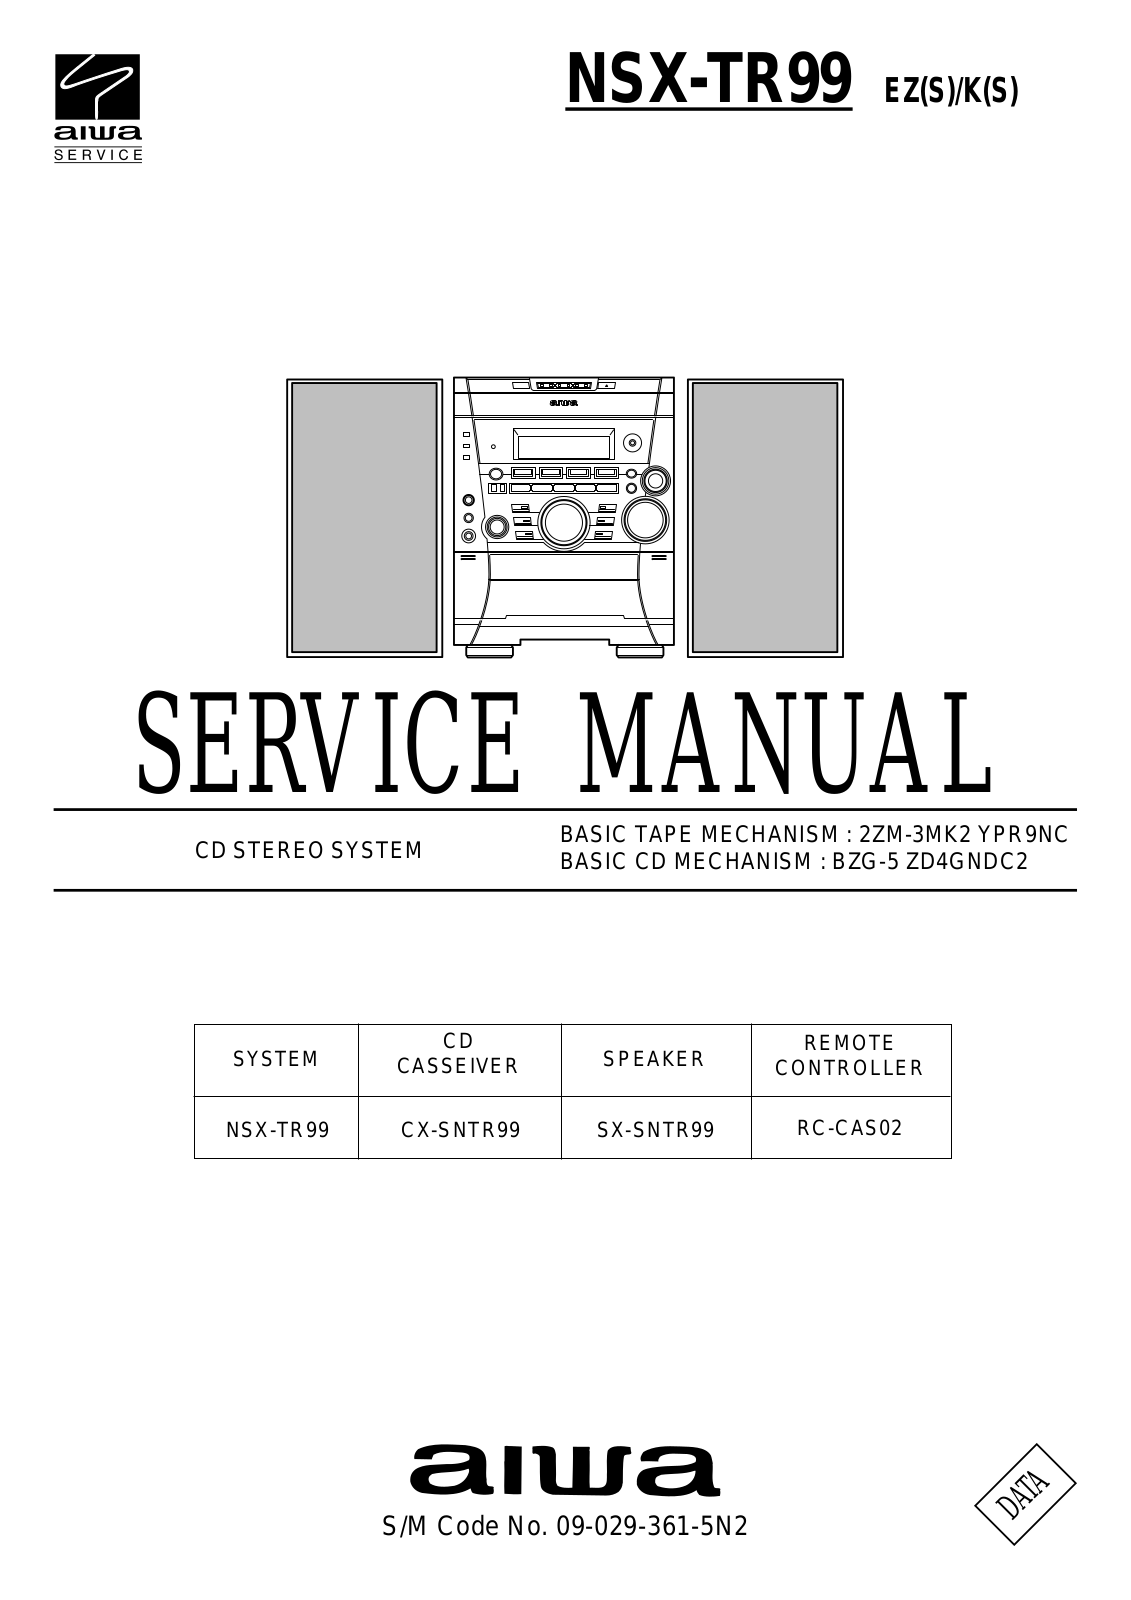 Aiwa NSX-TR99 User Manual